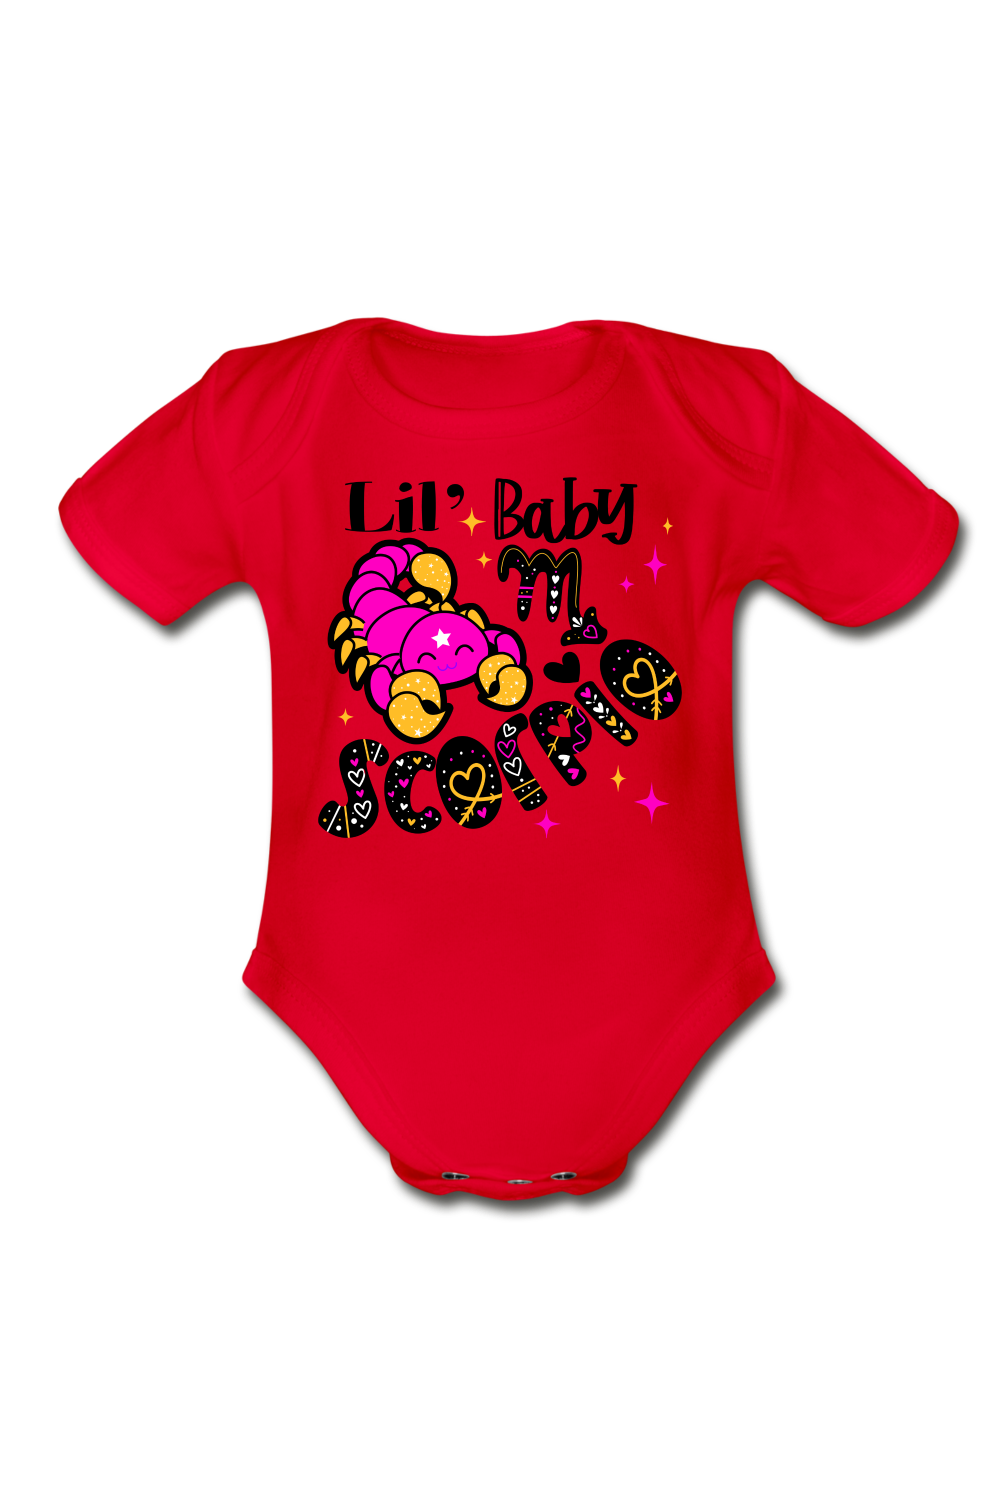 Unisex Baby Scorpio Short Sleeve Baby Bodysuit - red